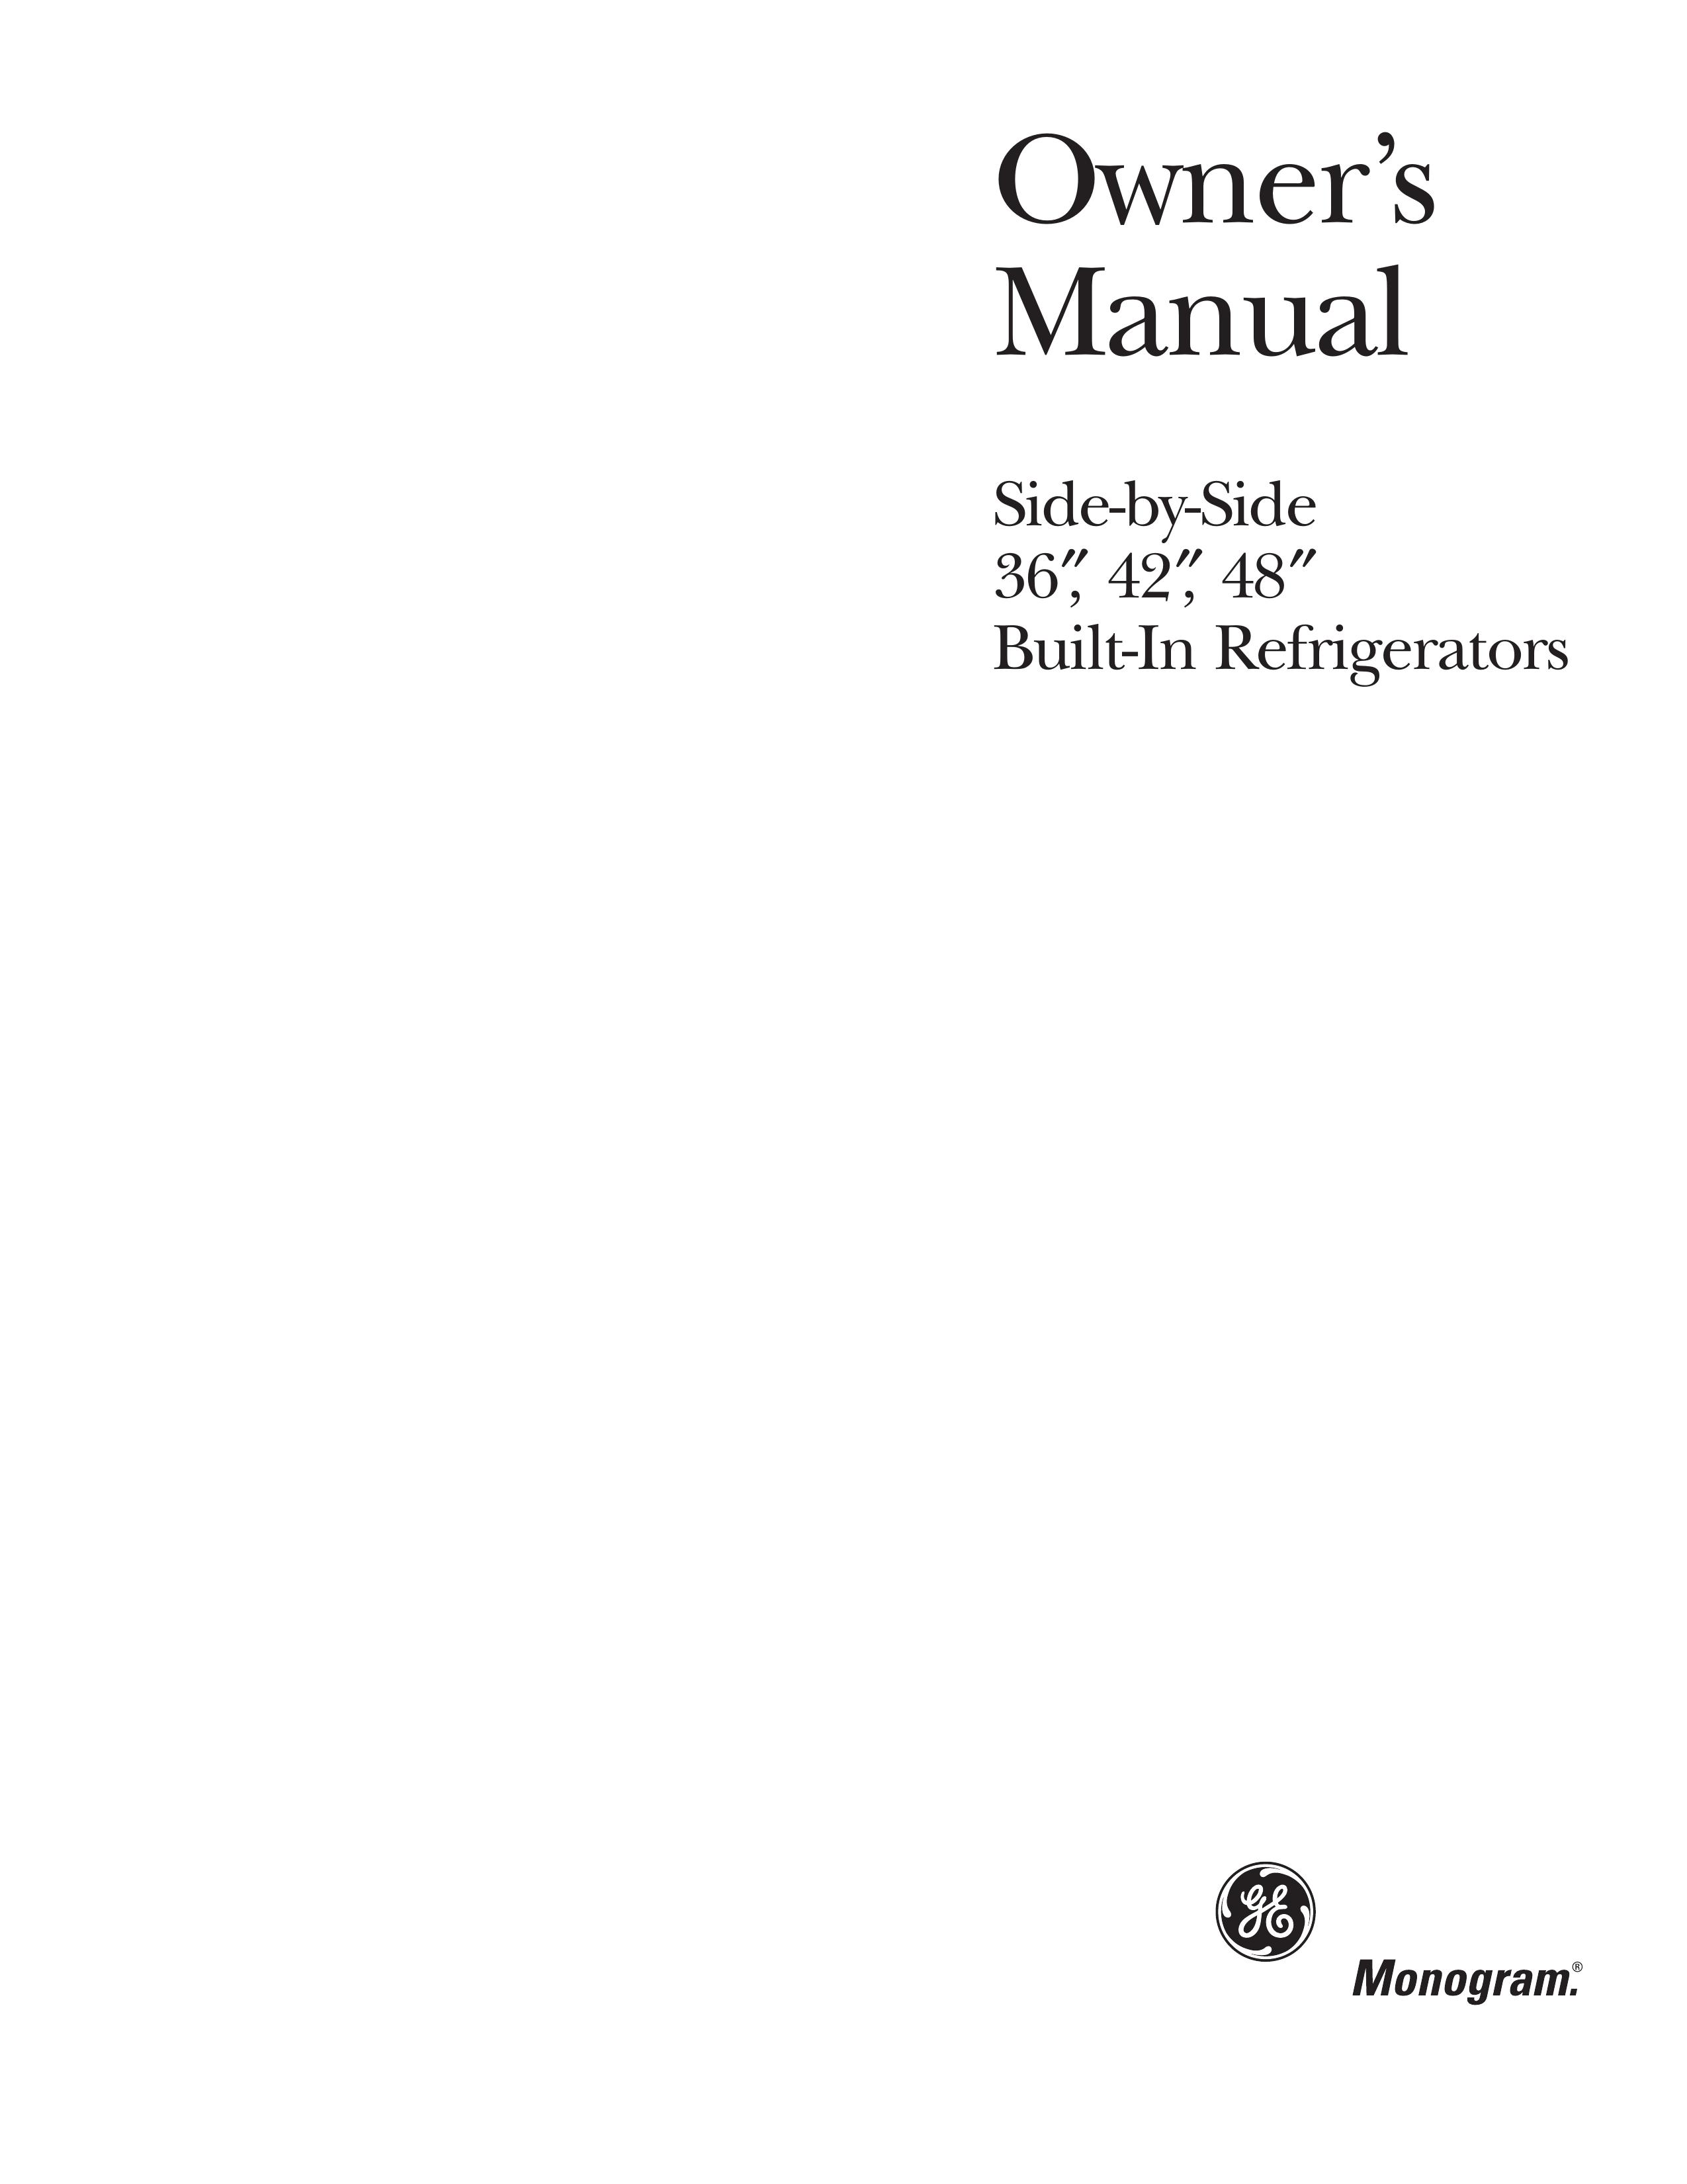 GE Monogram 42 Refrigerator User Manual